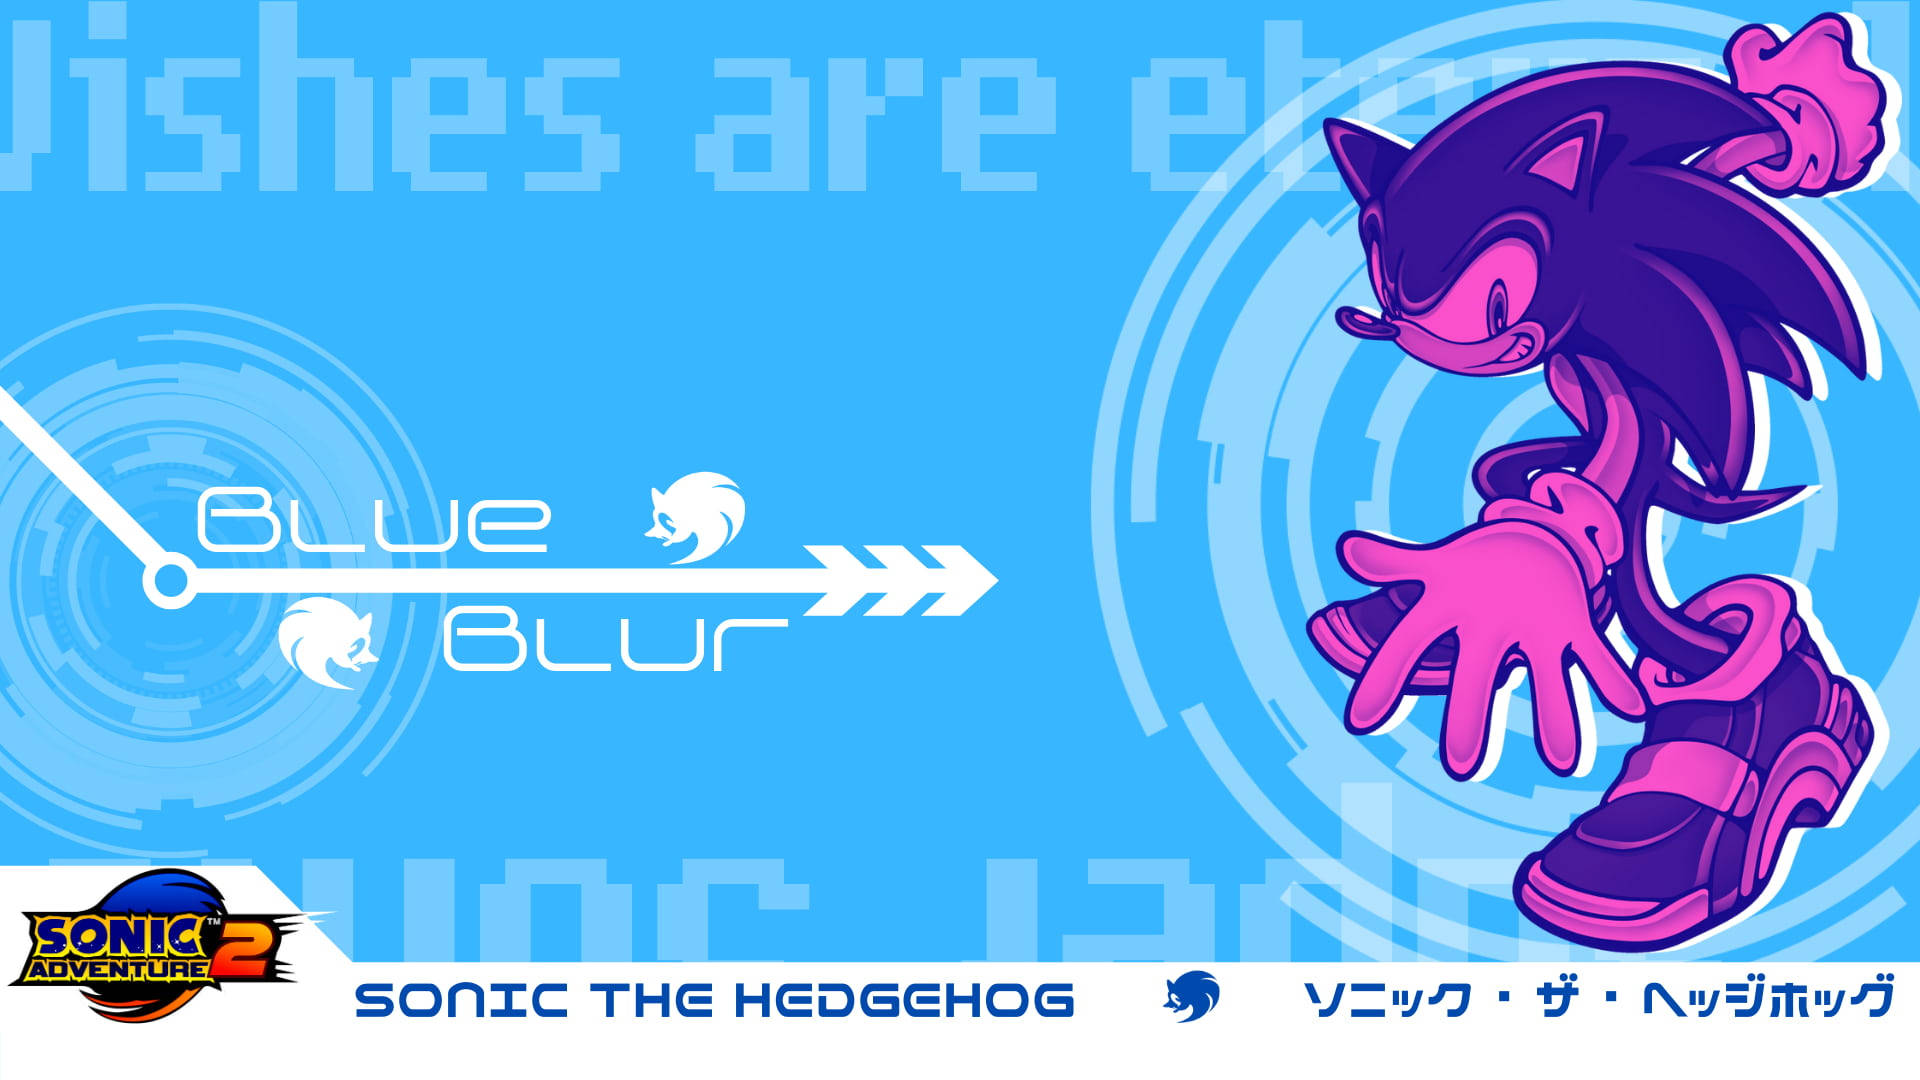 Vectorgrafikav Sonic The Hedgehog. Wallpaper